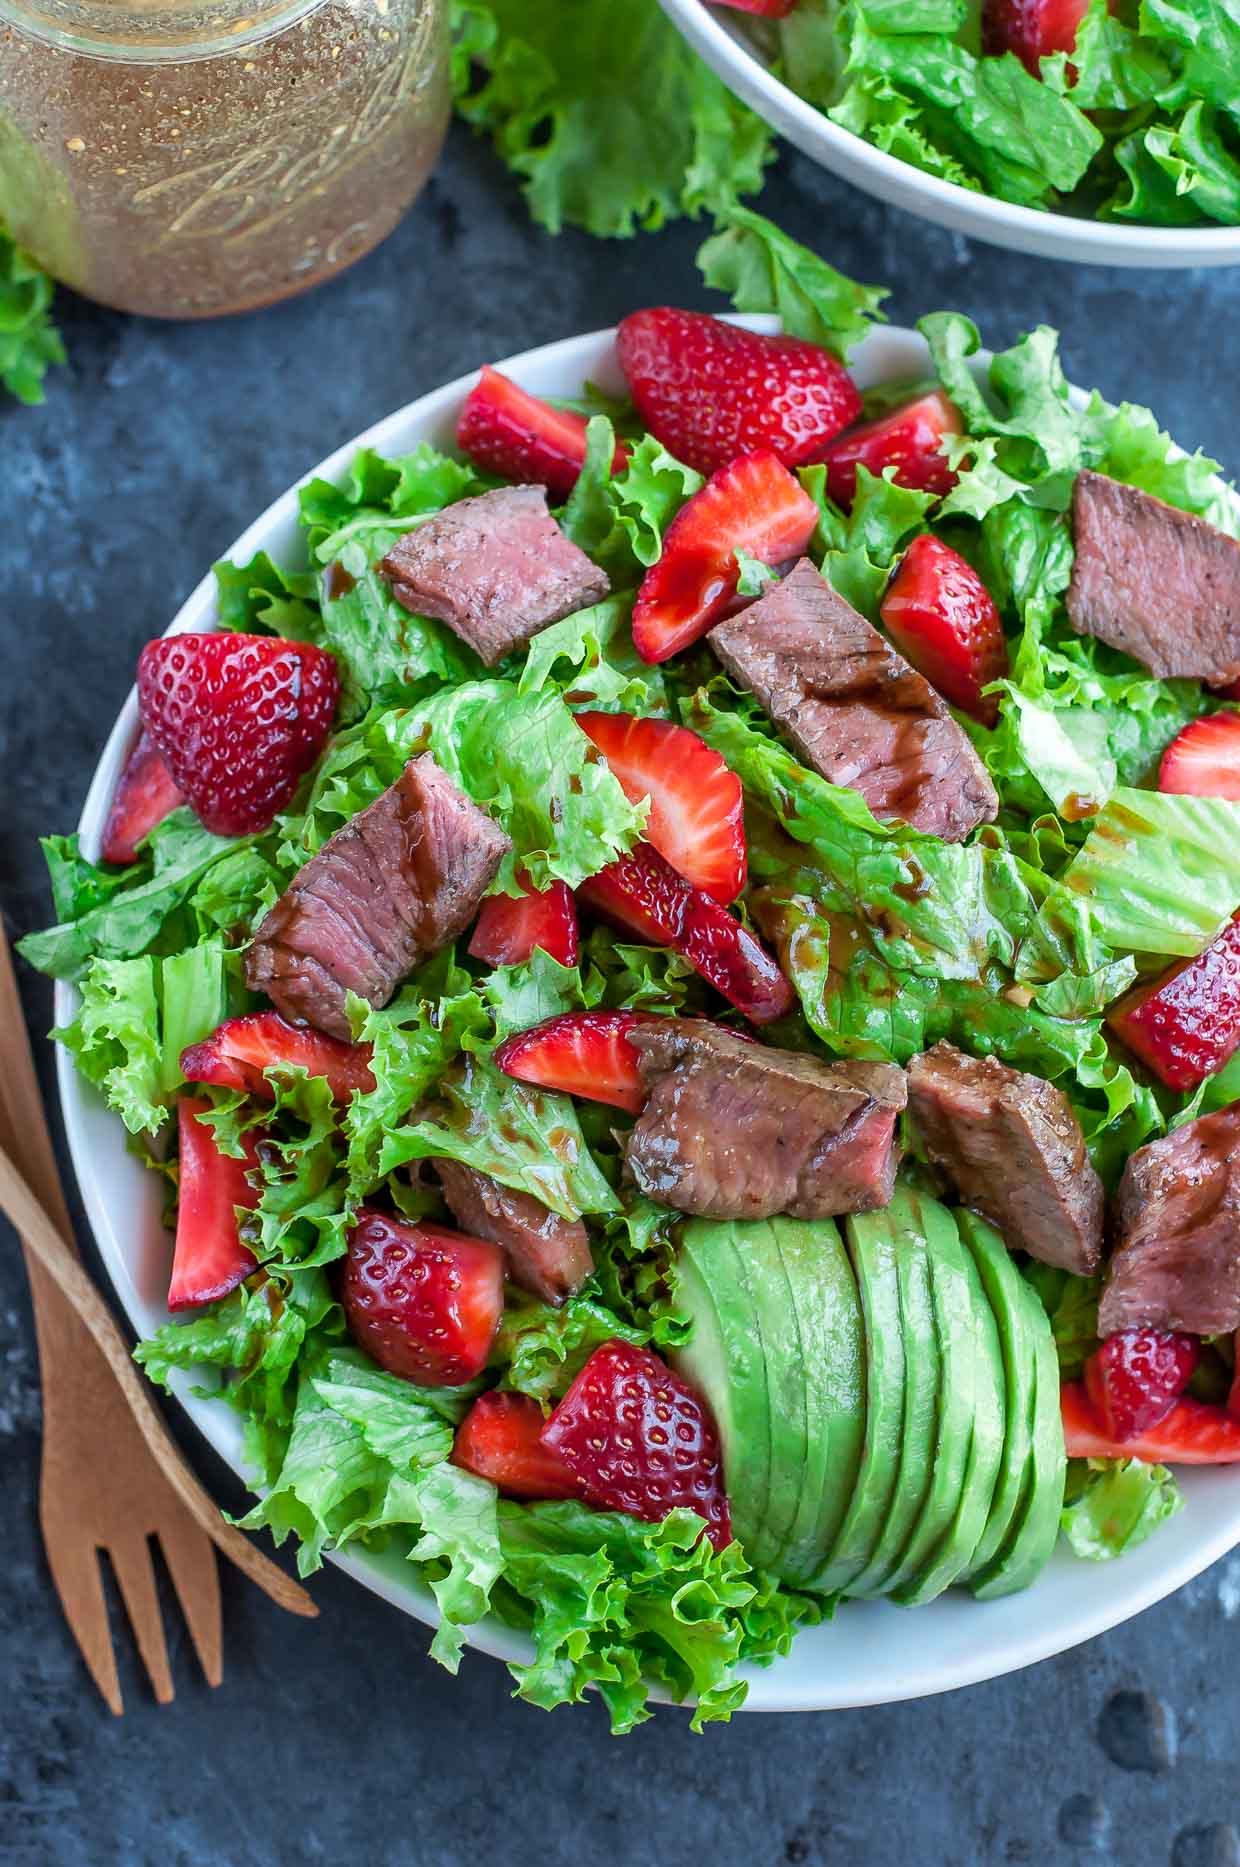 Strawberry Steak Salad with Balsamic Vinaigrette